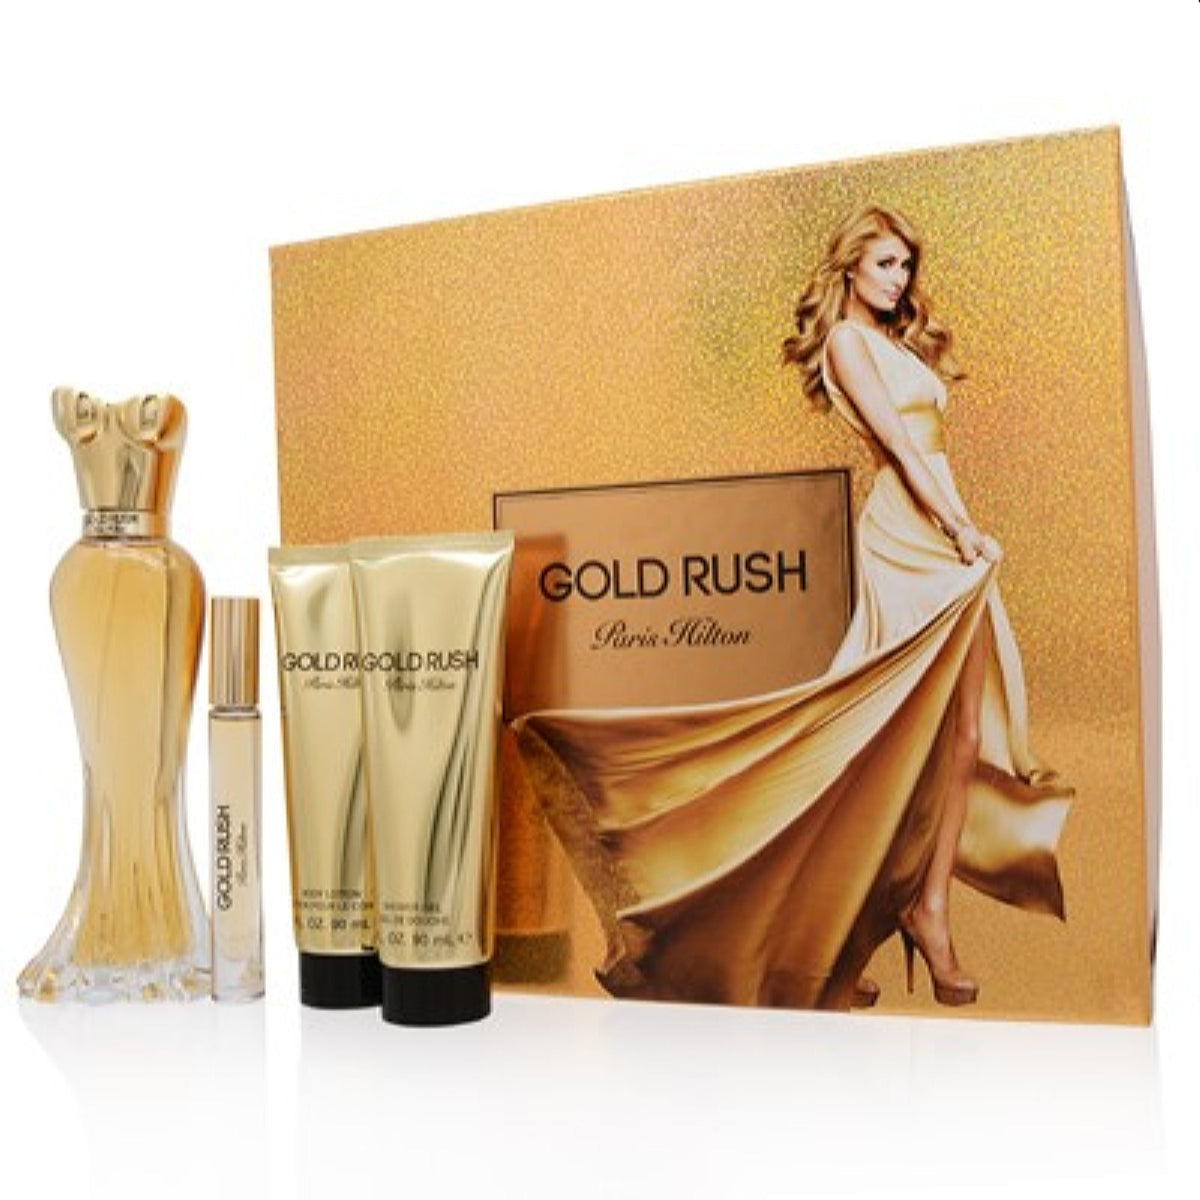 Gold Rush Paris Hilton Set For Women   